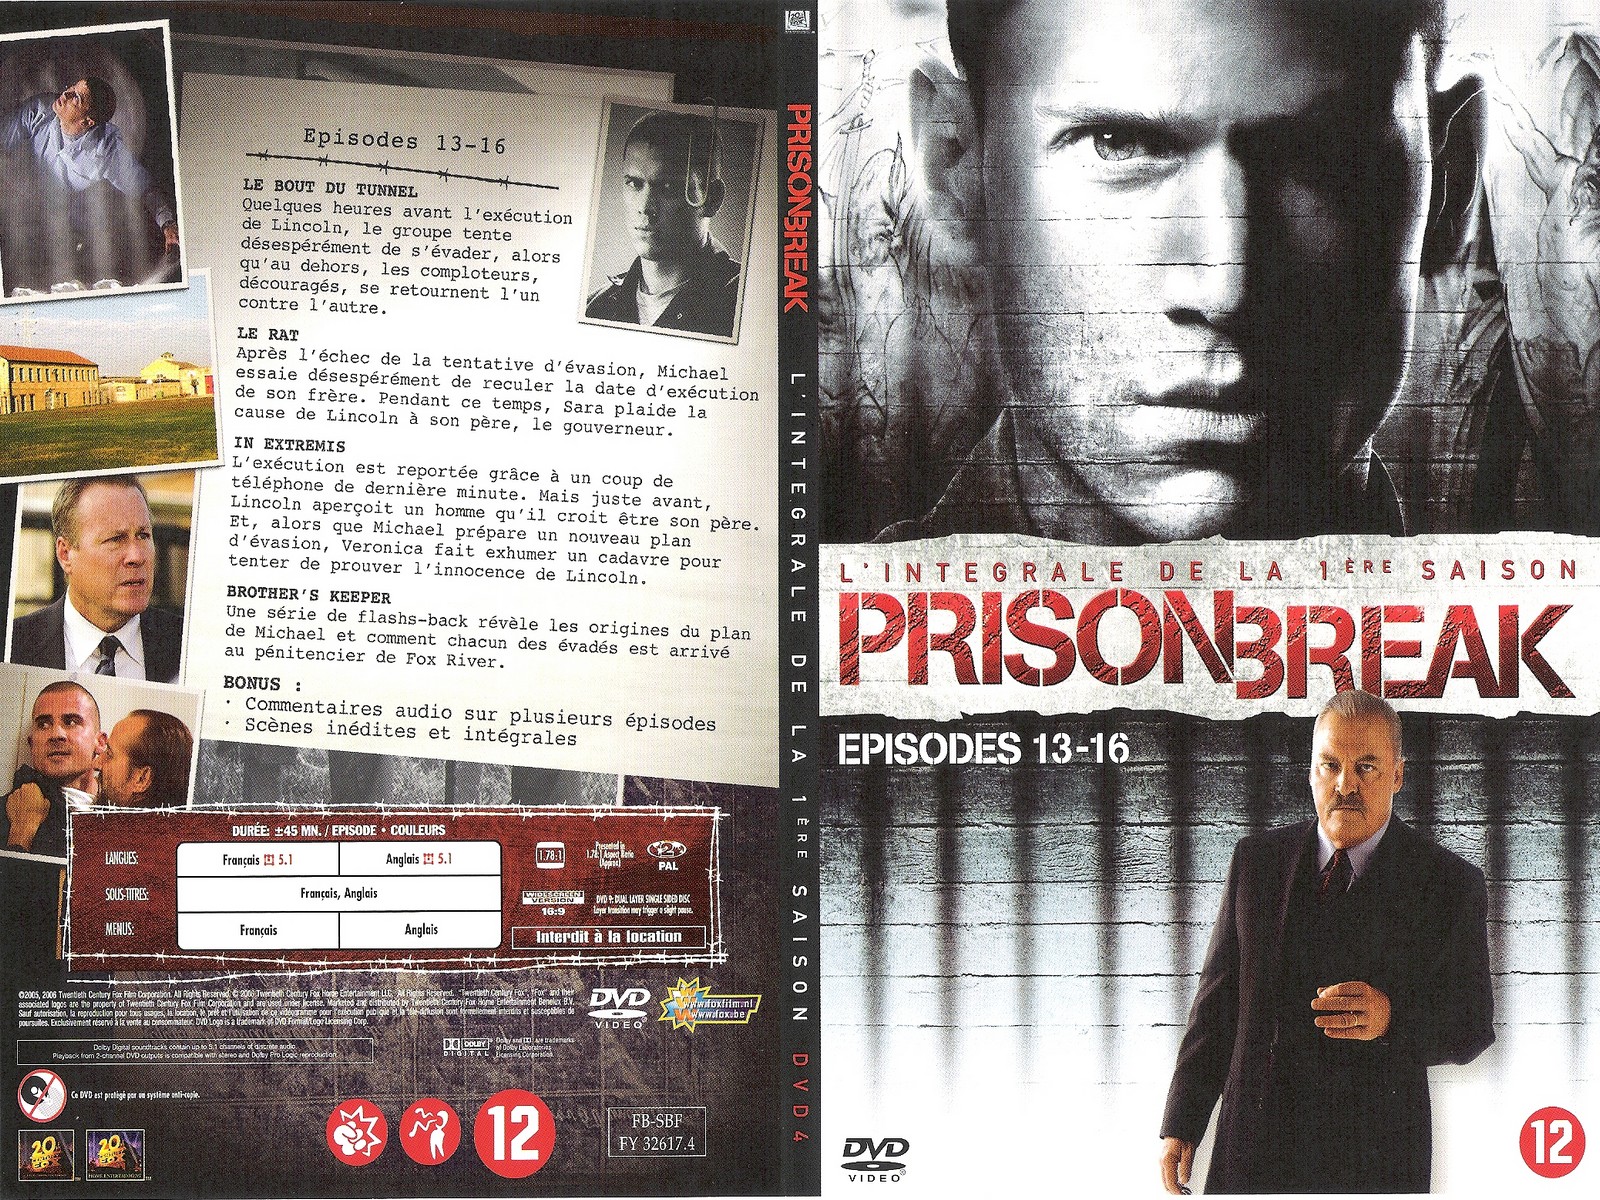 Jaquette DVD Prison break saison 1 dvd 4 - SLIM